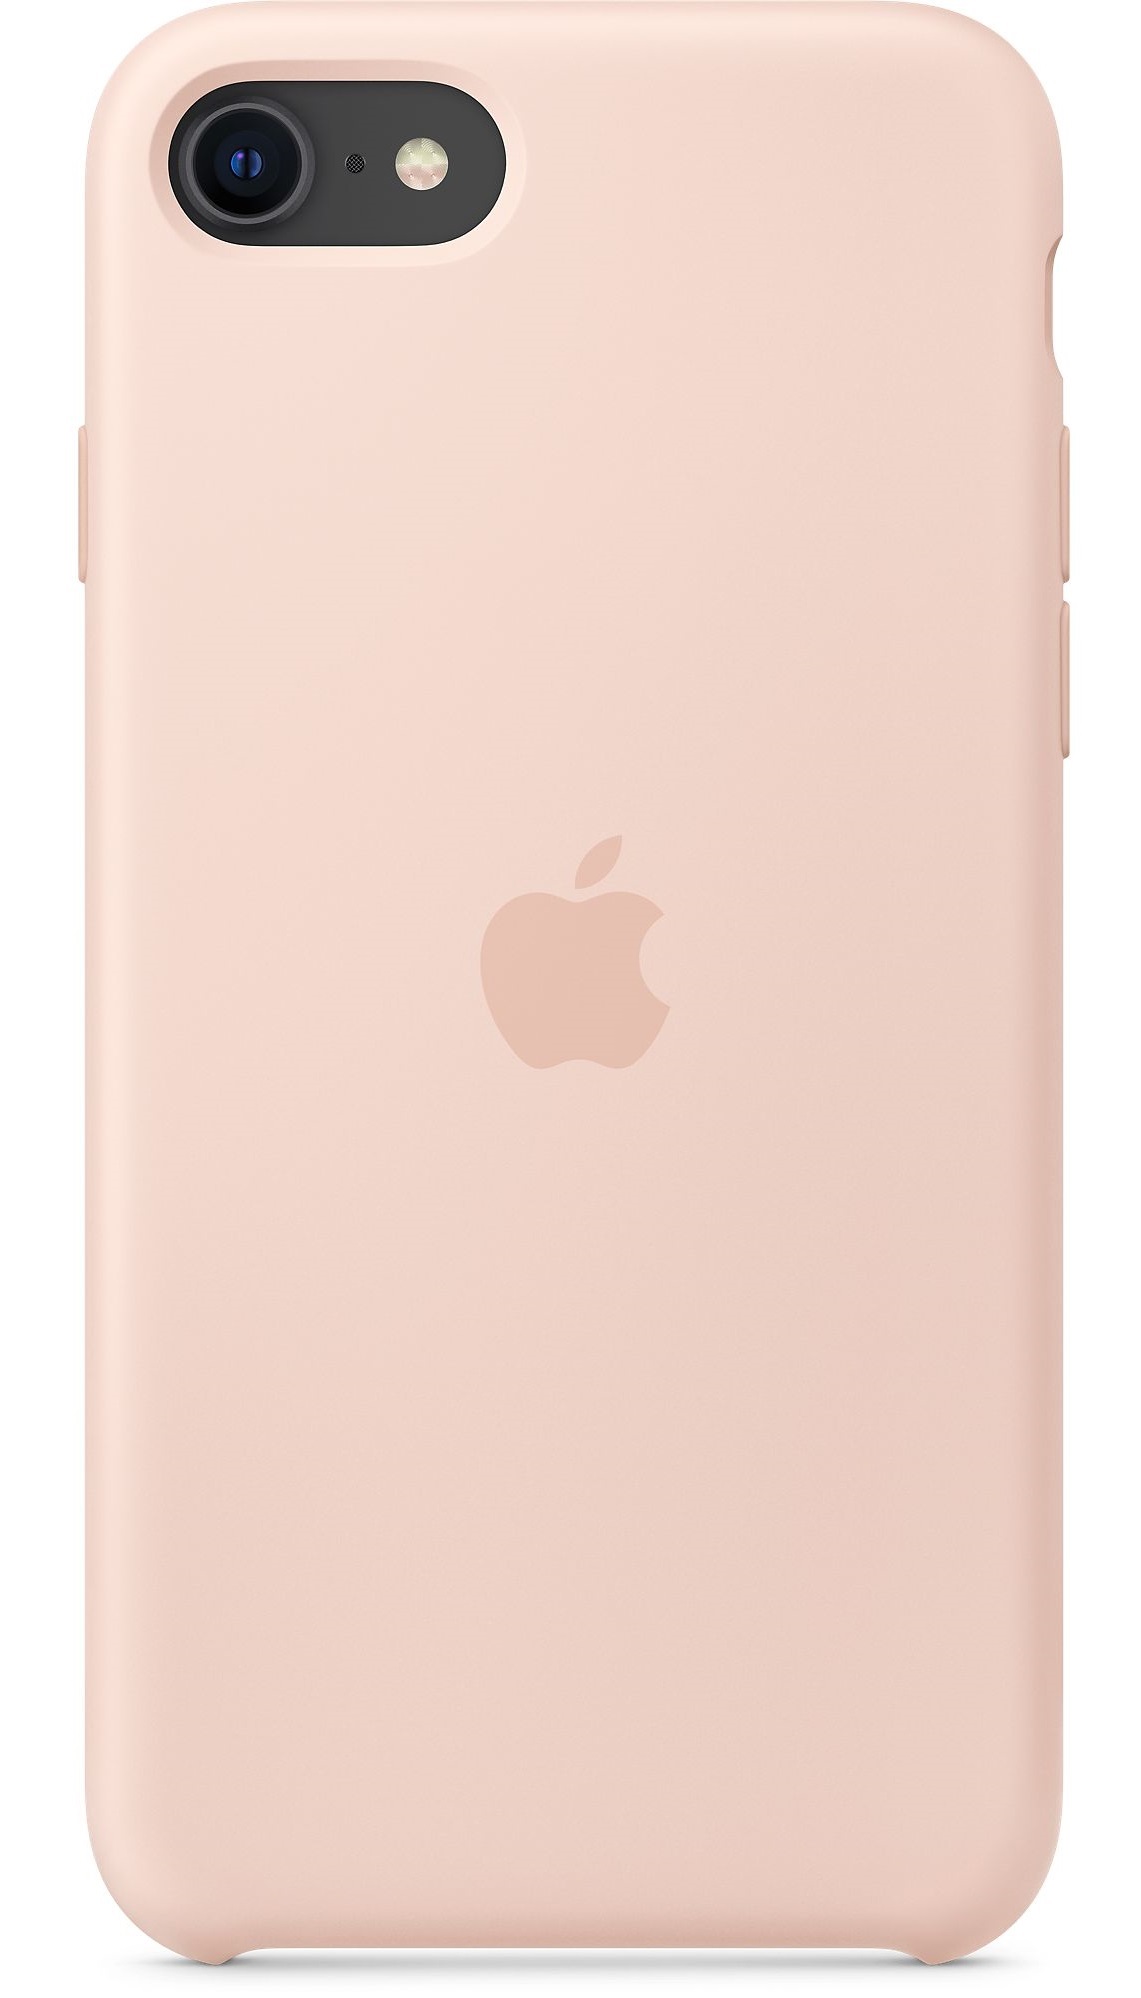 Накладка APPLE iPhone SE Silicone Case Pink Sand (MXYK2ZM/A) в Киеве